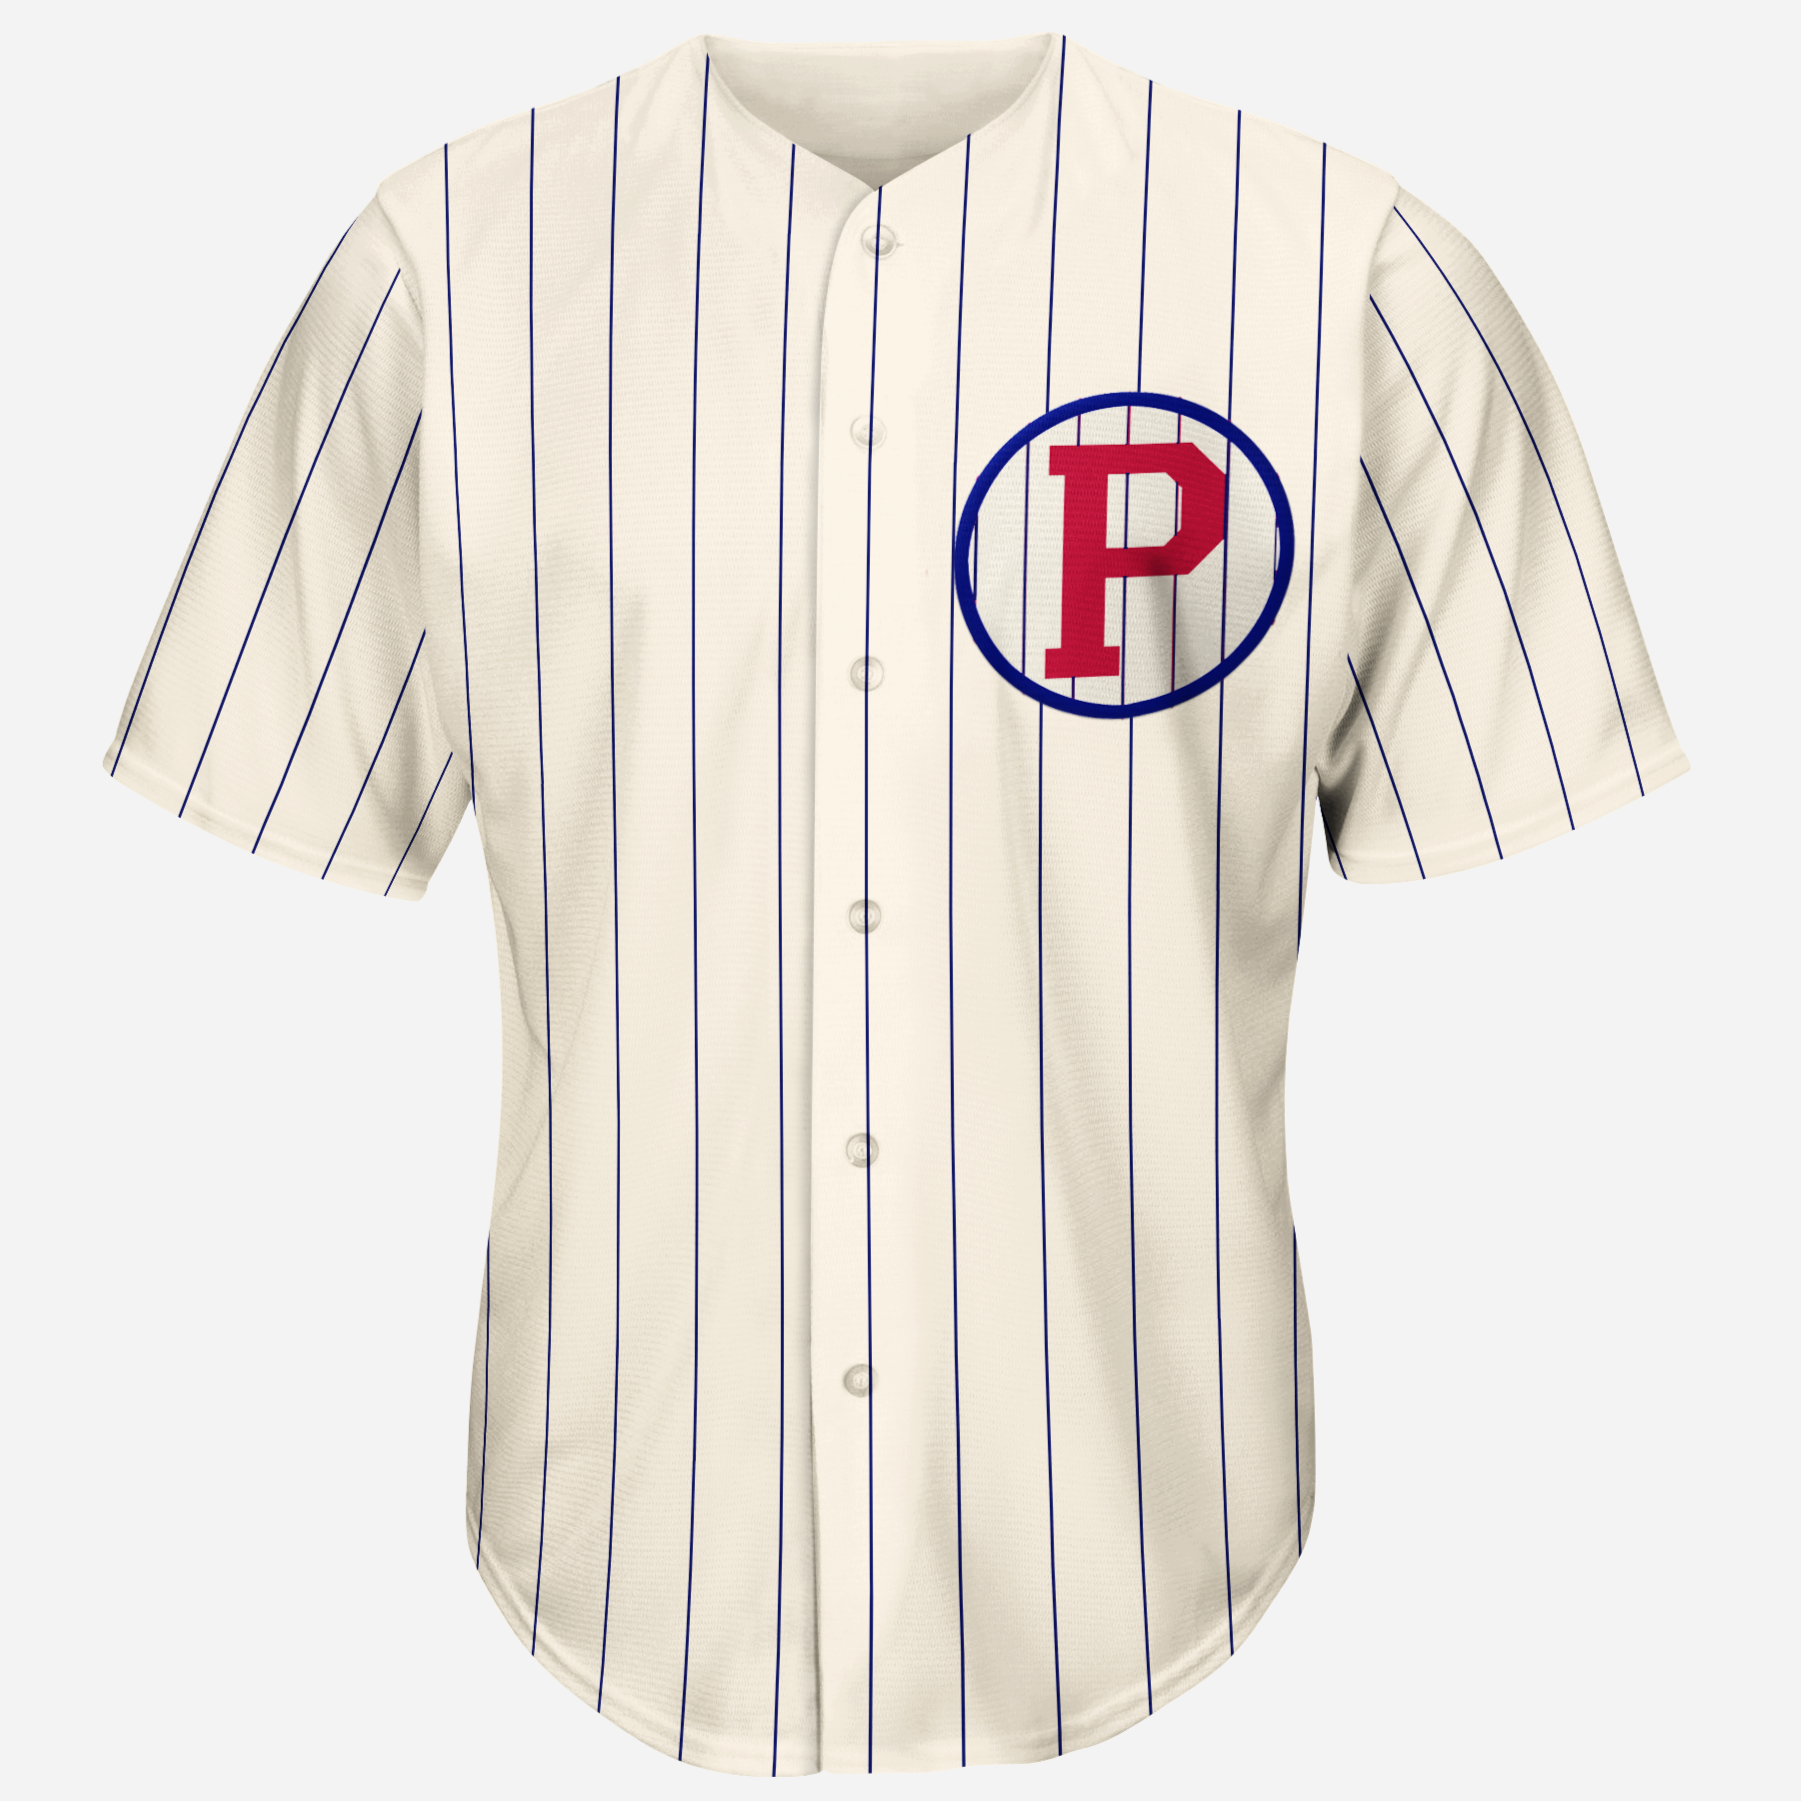 PCL Padres Road Jersey - Gray (1952) - XL - Royal Retros